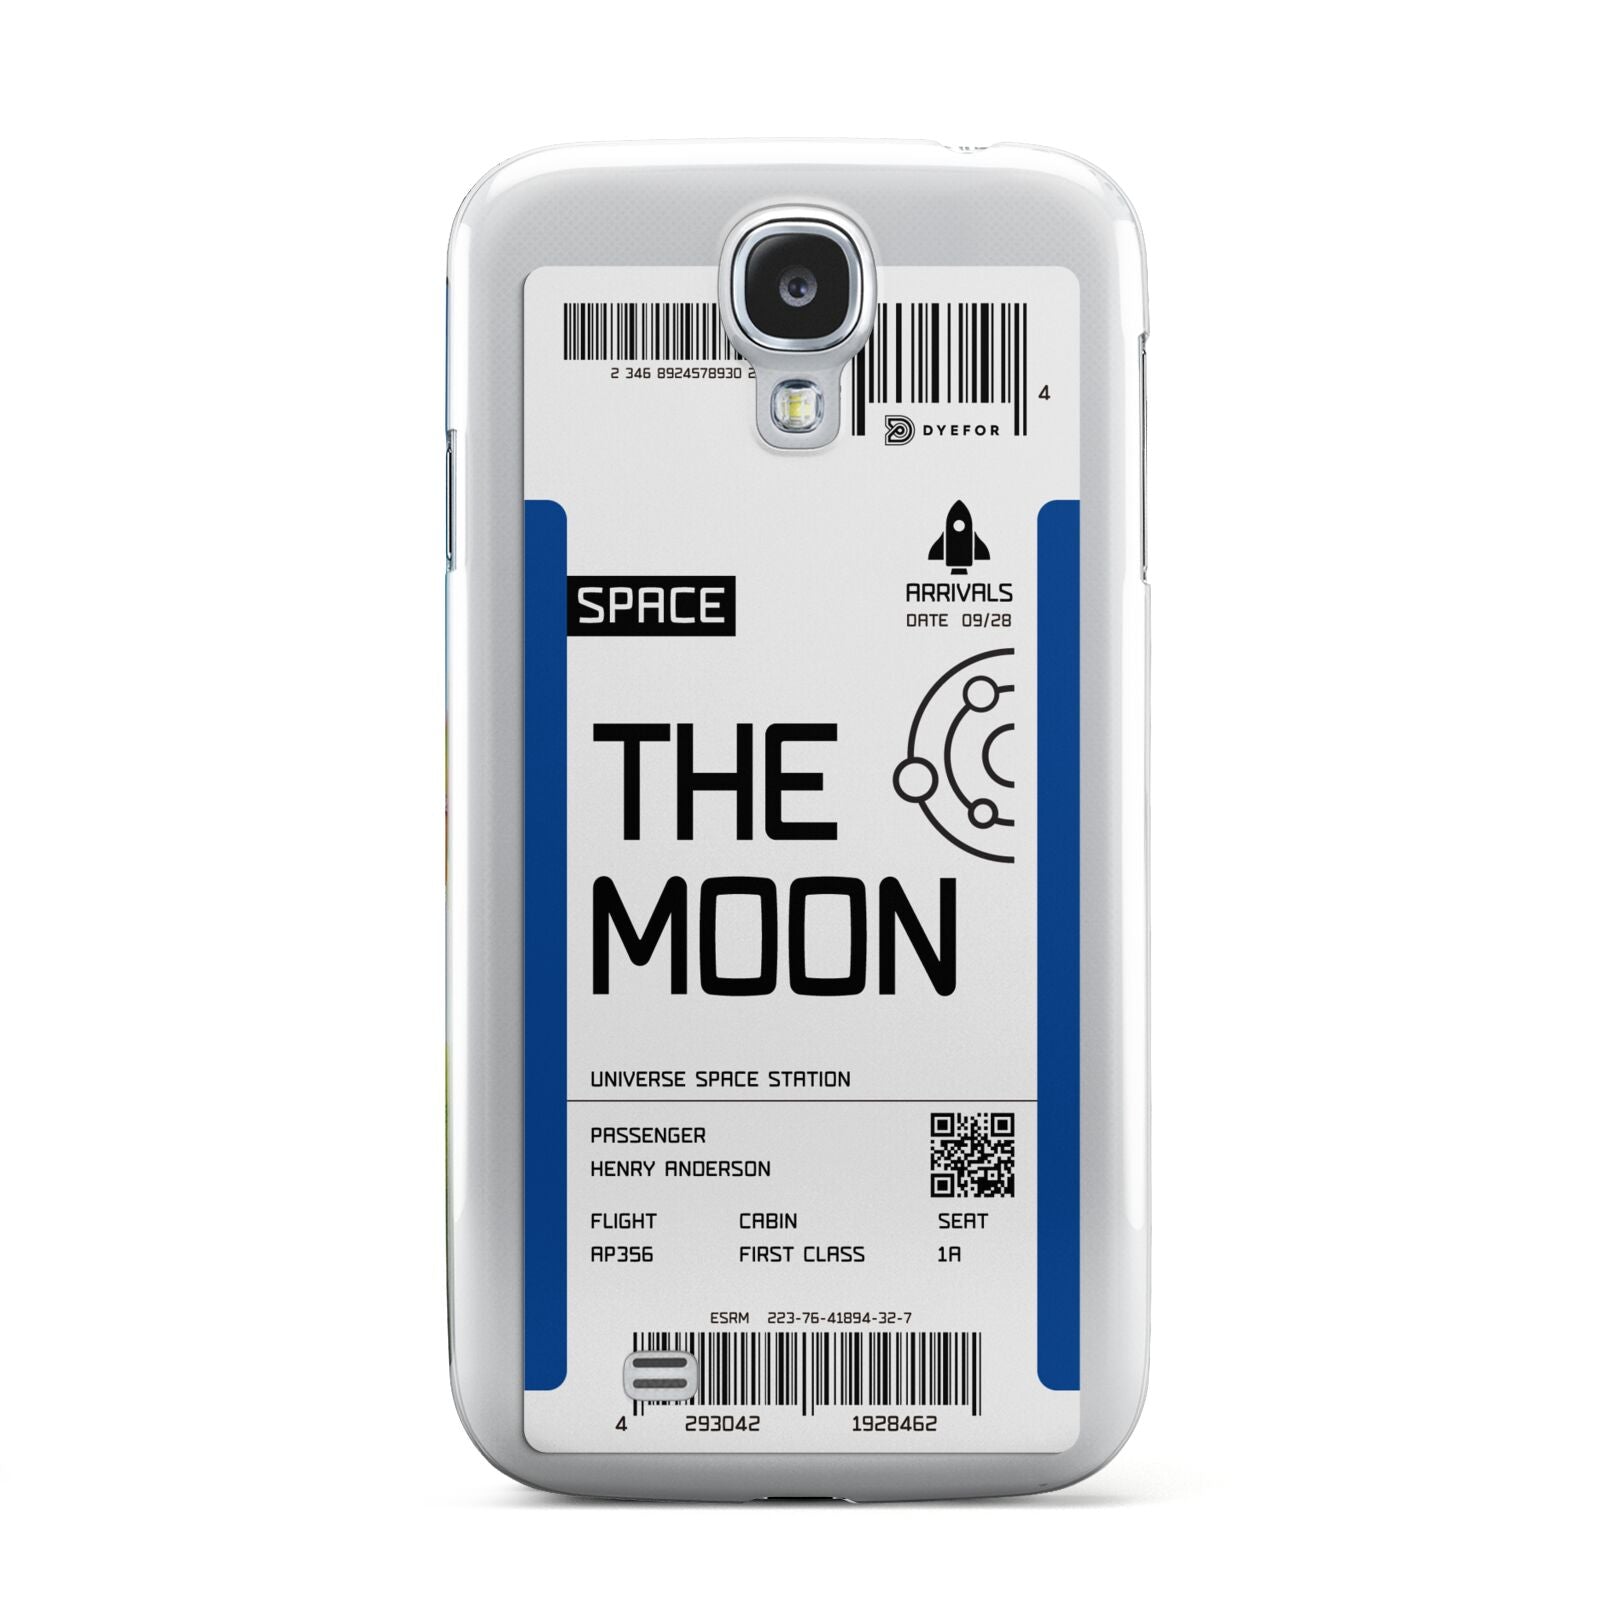 The Moon Boarding Pass Samsung Galaxy S4 Case